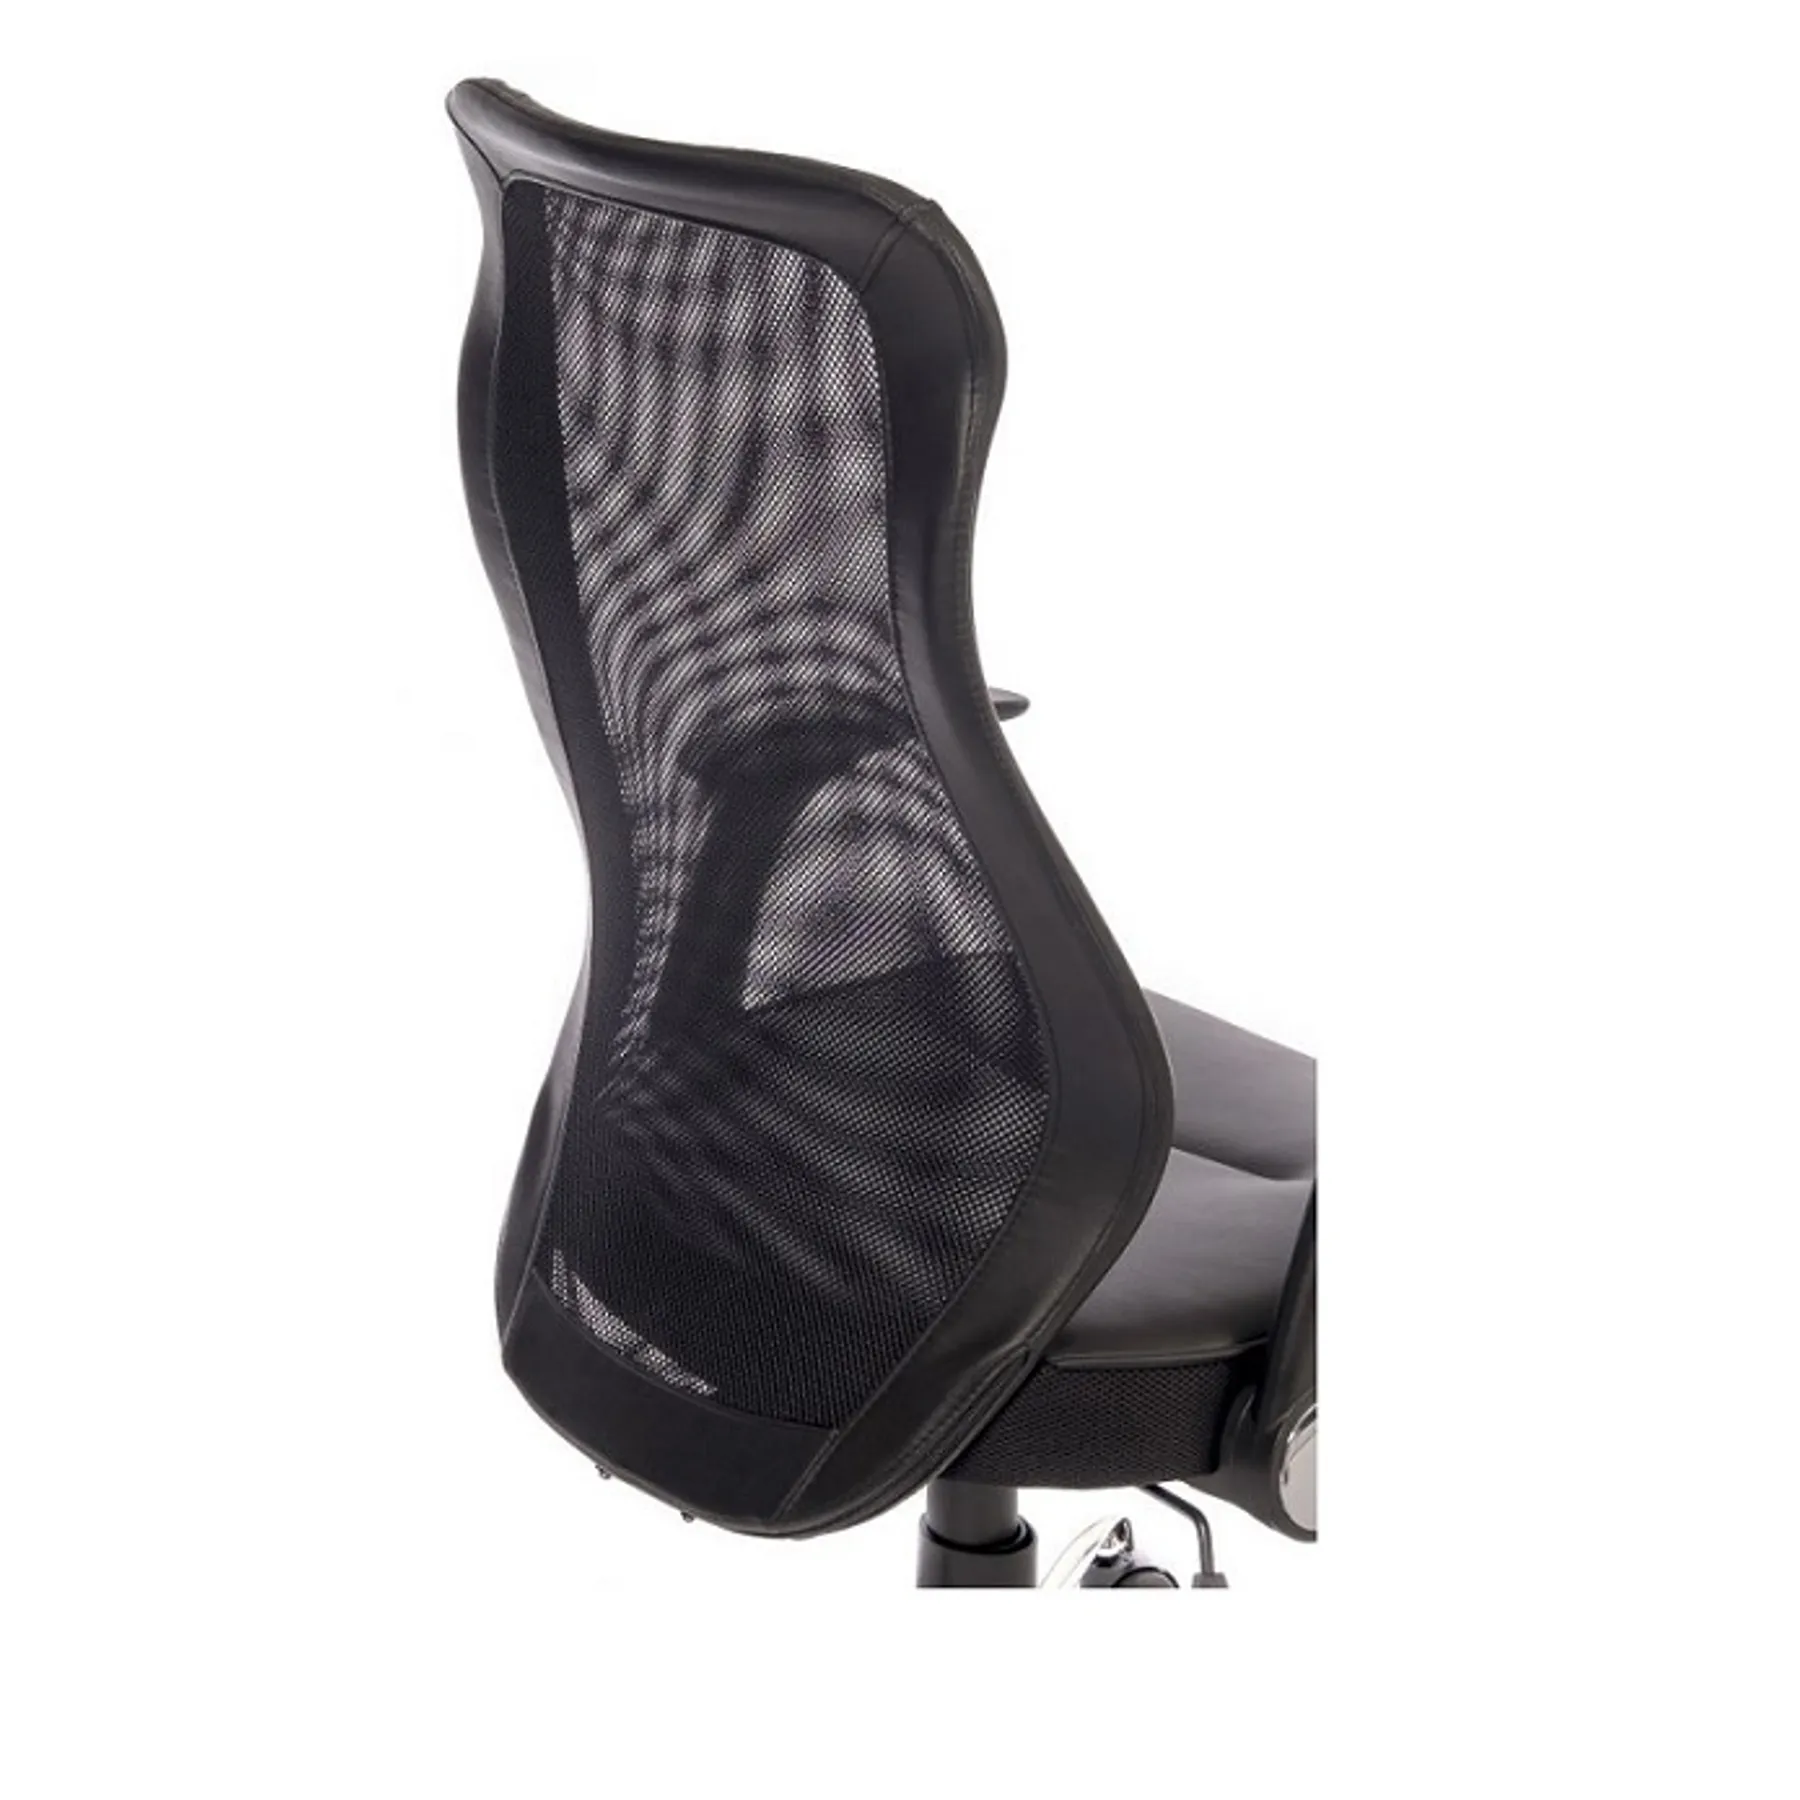 LOF Direct Teknik Curve Mesh Back Chair 6912 Rear